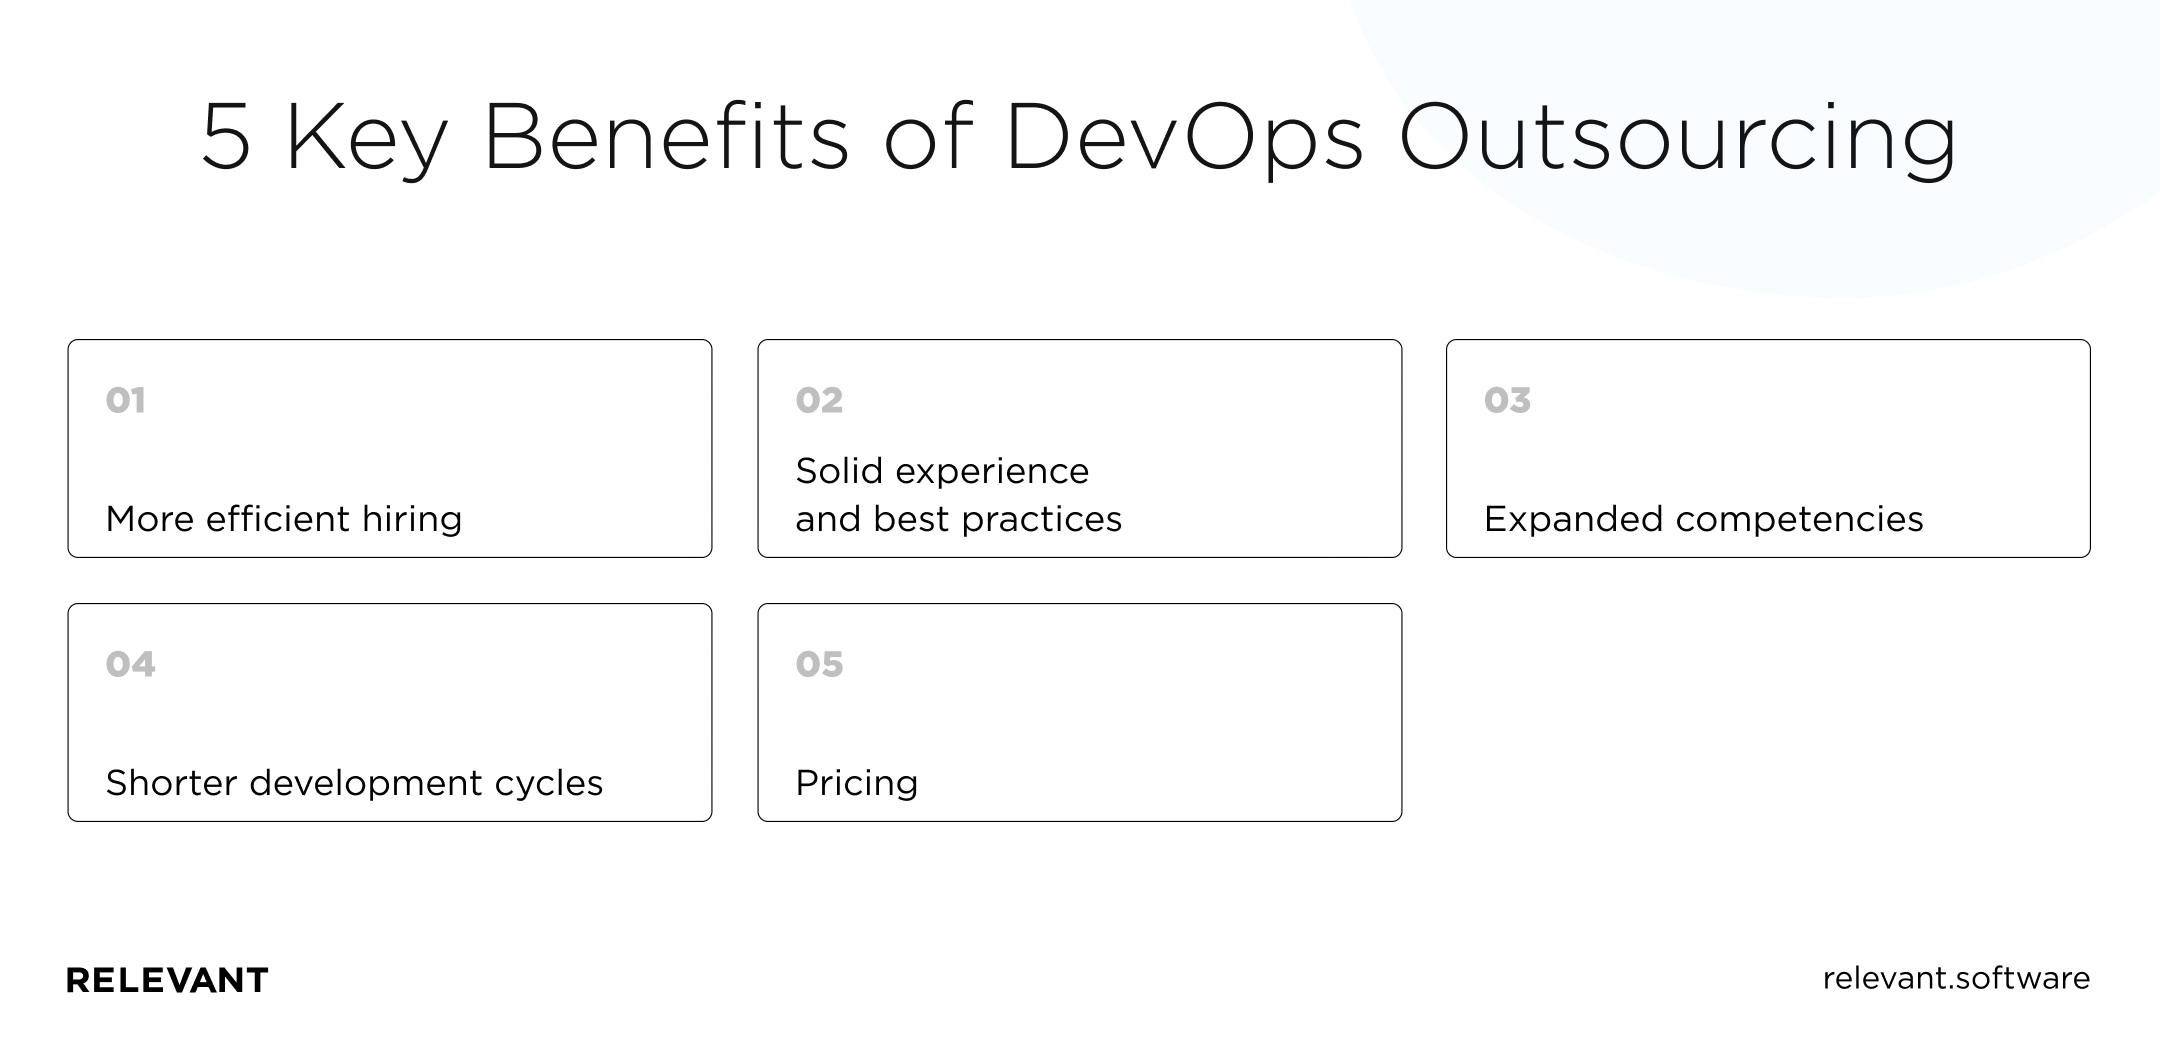 5 Key Benefits of DevOps Outsourcing